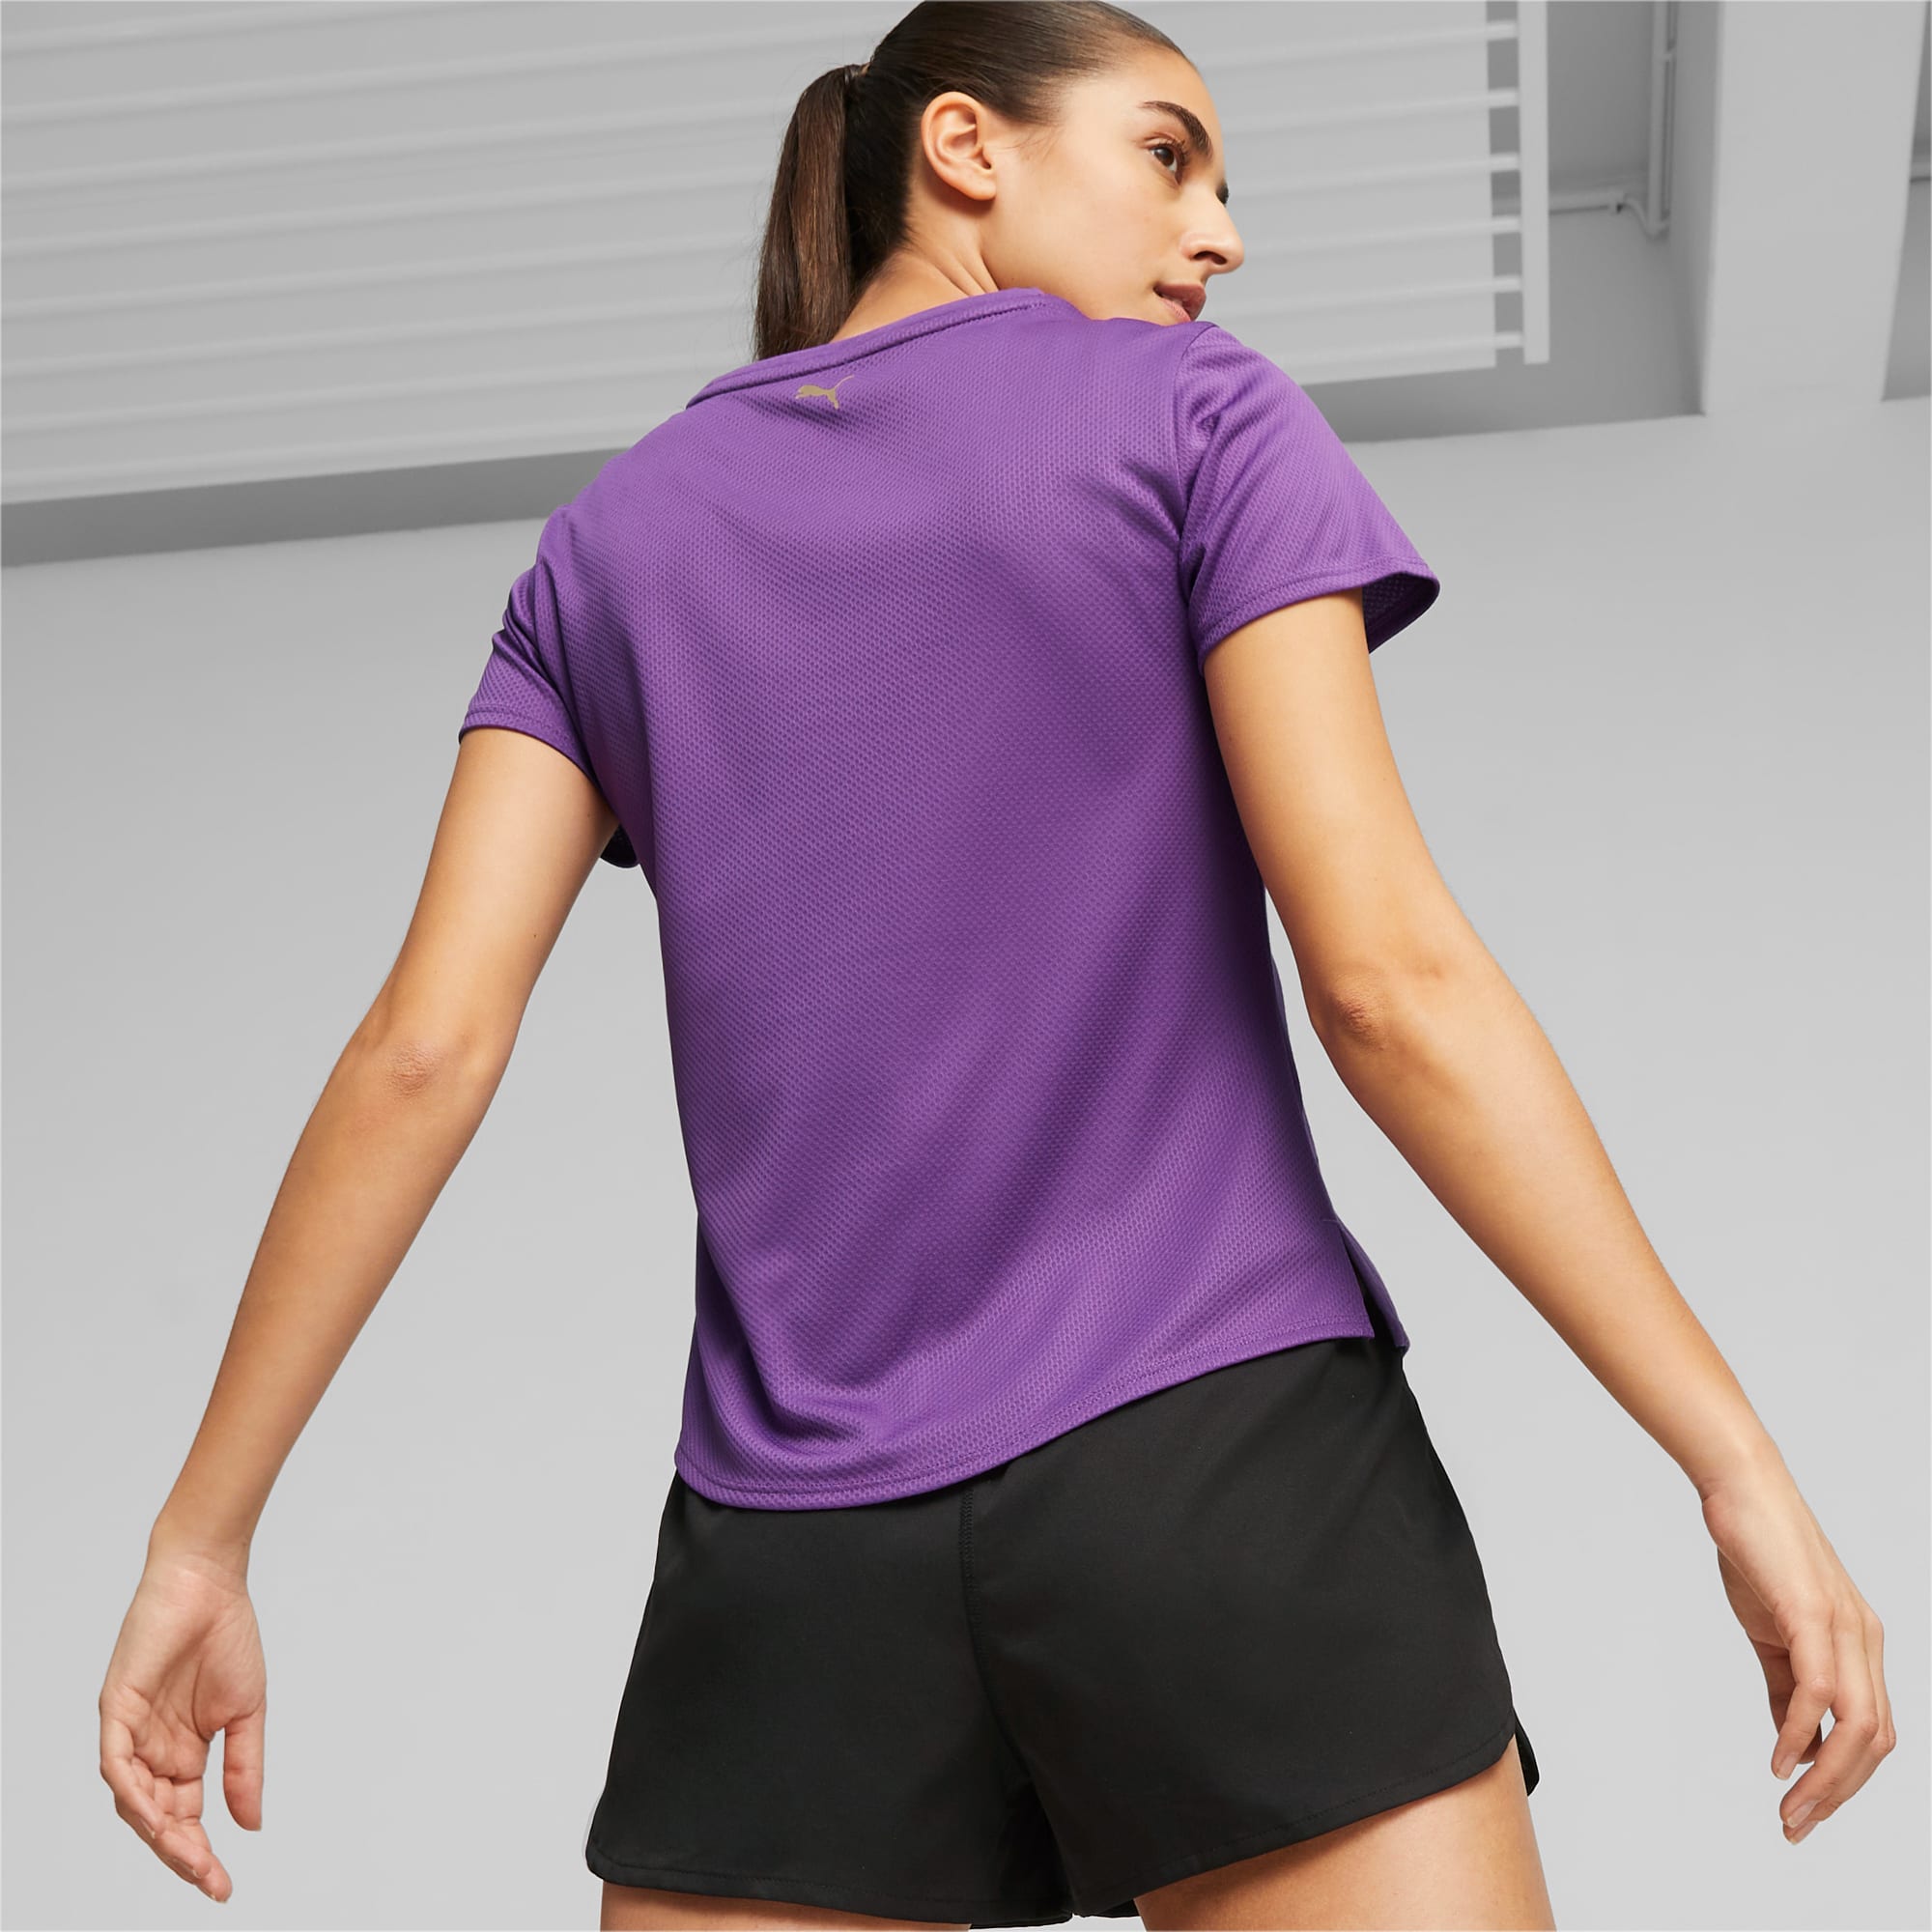 PUMA FIT Ultrabreathe Trainings-T-Shirt Damen, Lila/Gold, Größe: M, Kleidung